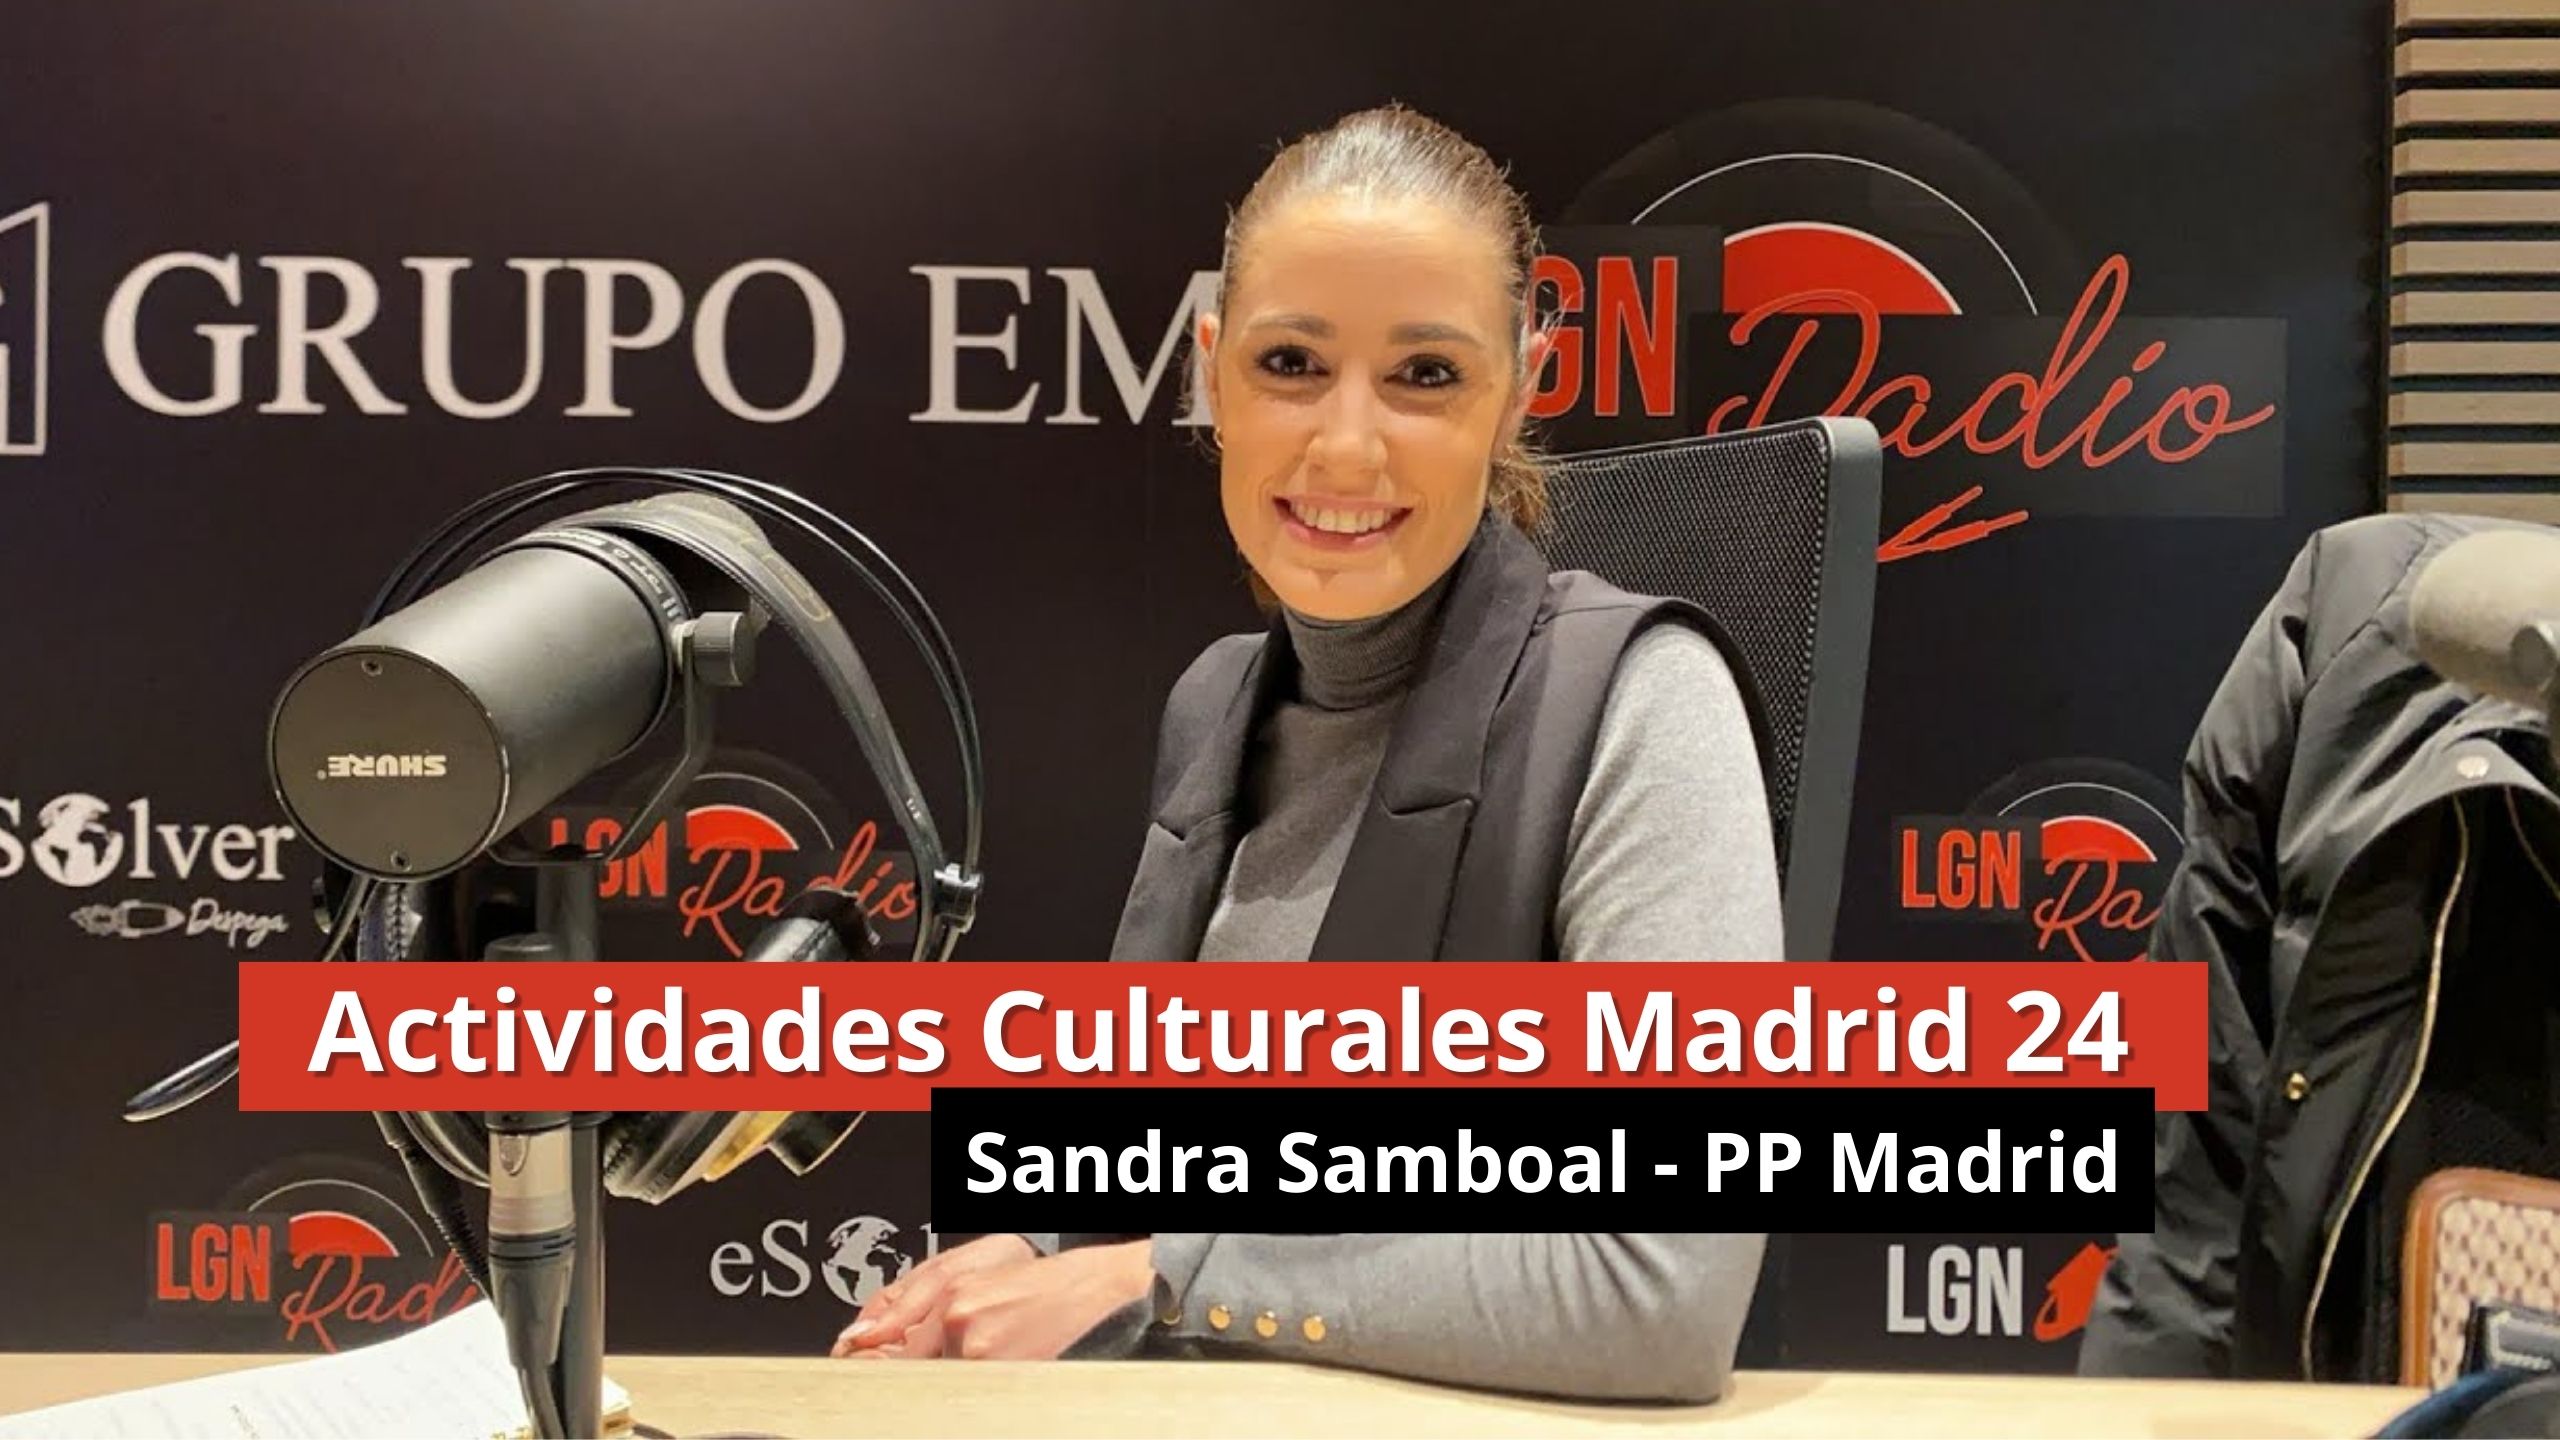 17-01-24 Actividades Culturales Madrid 24 - Sandra Samboal - PP Madrid